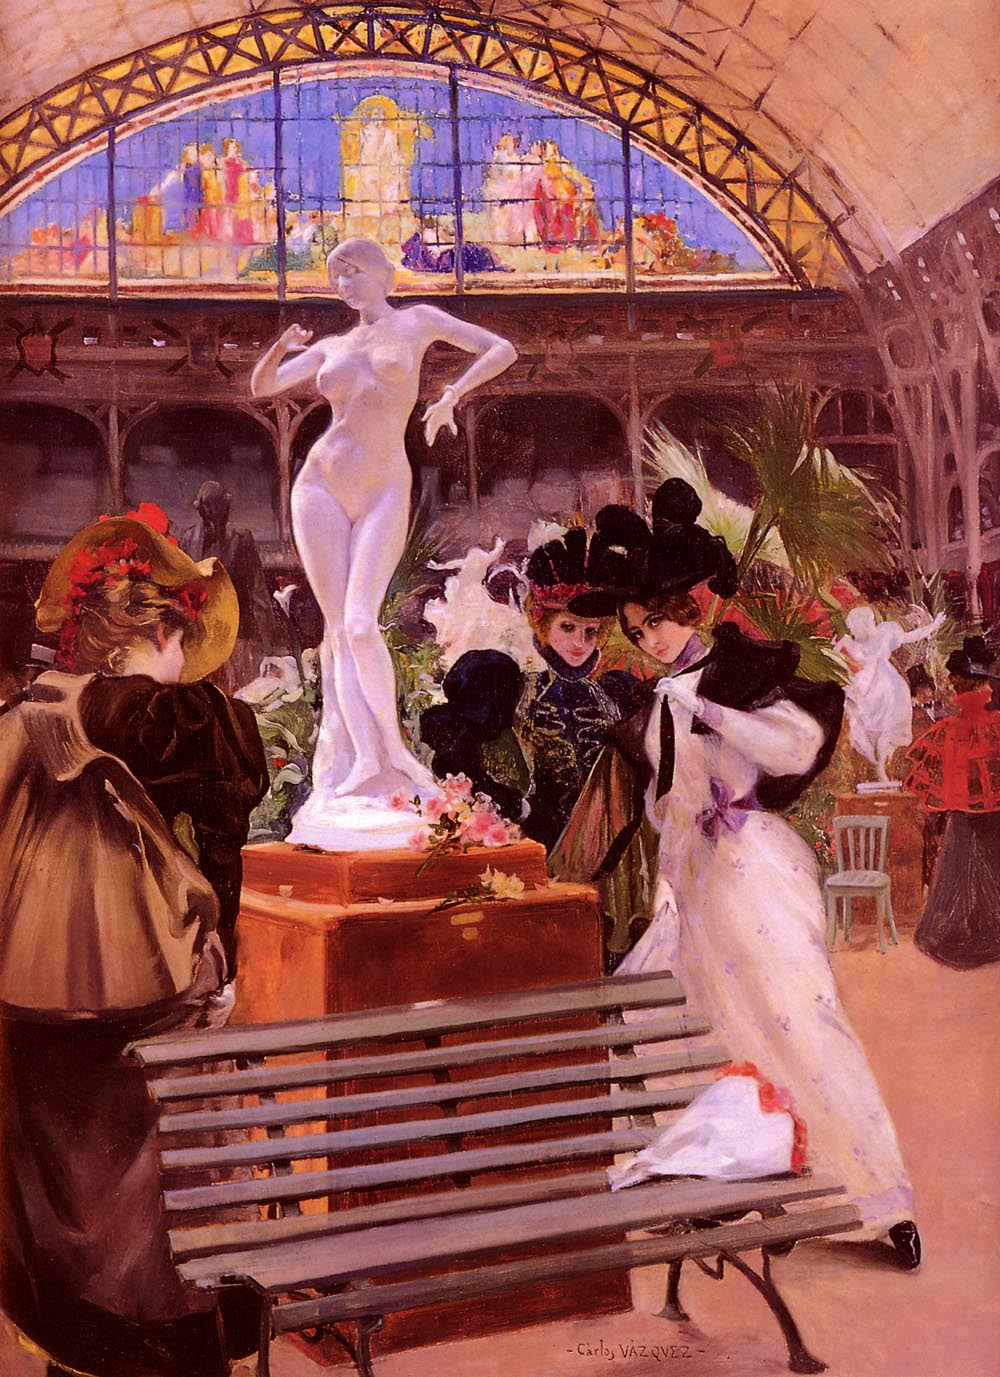 Cleo De Merode at the Salon by Carlos Vazquez Ubeda (1869 - 1944)